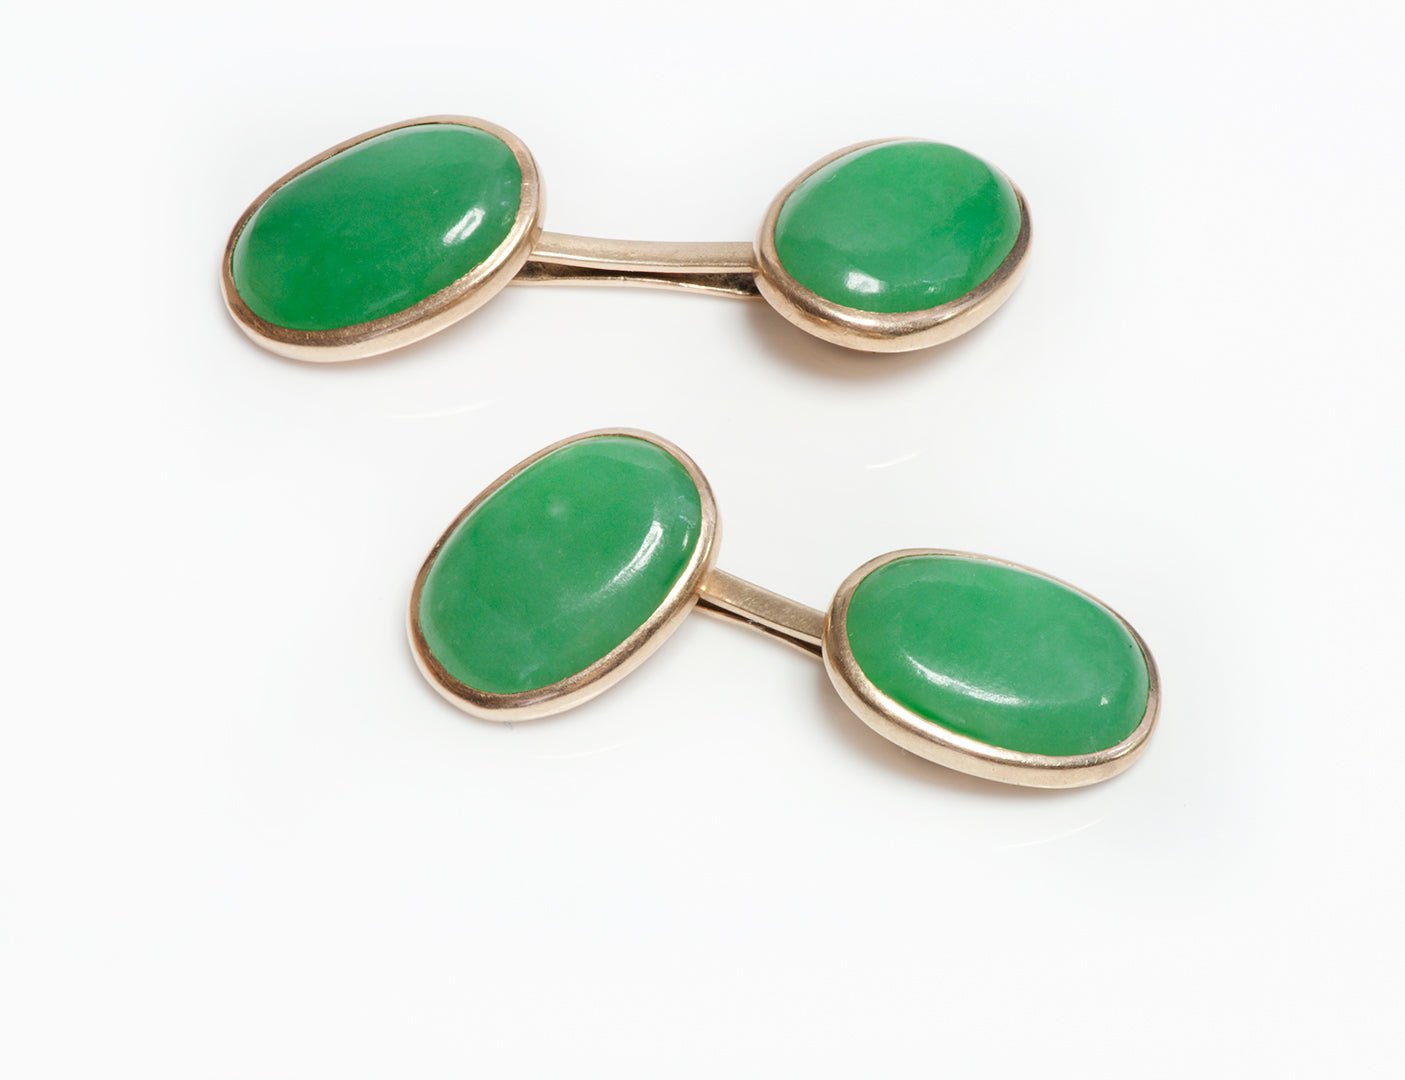 Antique Gold GIA Certified Natural Untreated Translucent Jadeite Jade Cufflinks - DSF Antique Jewelry